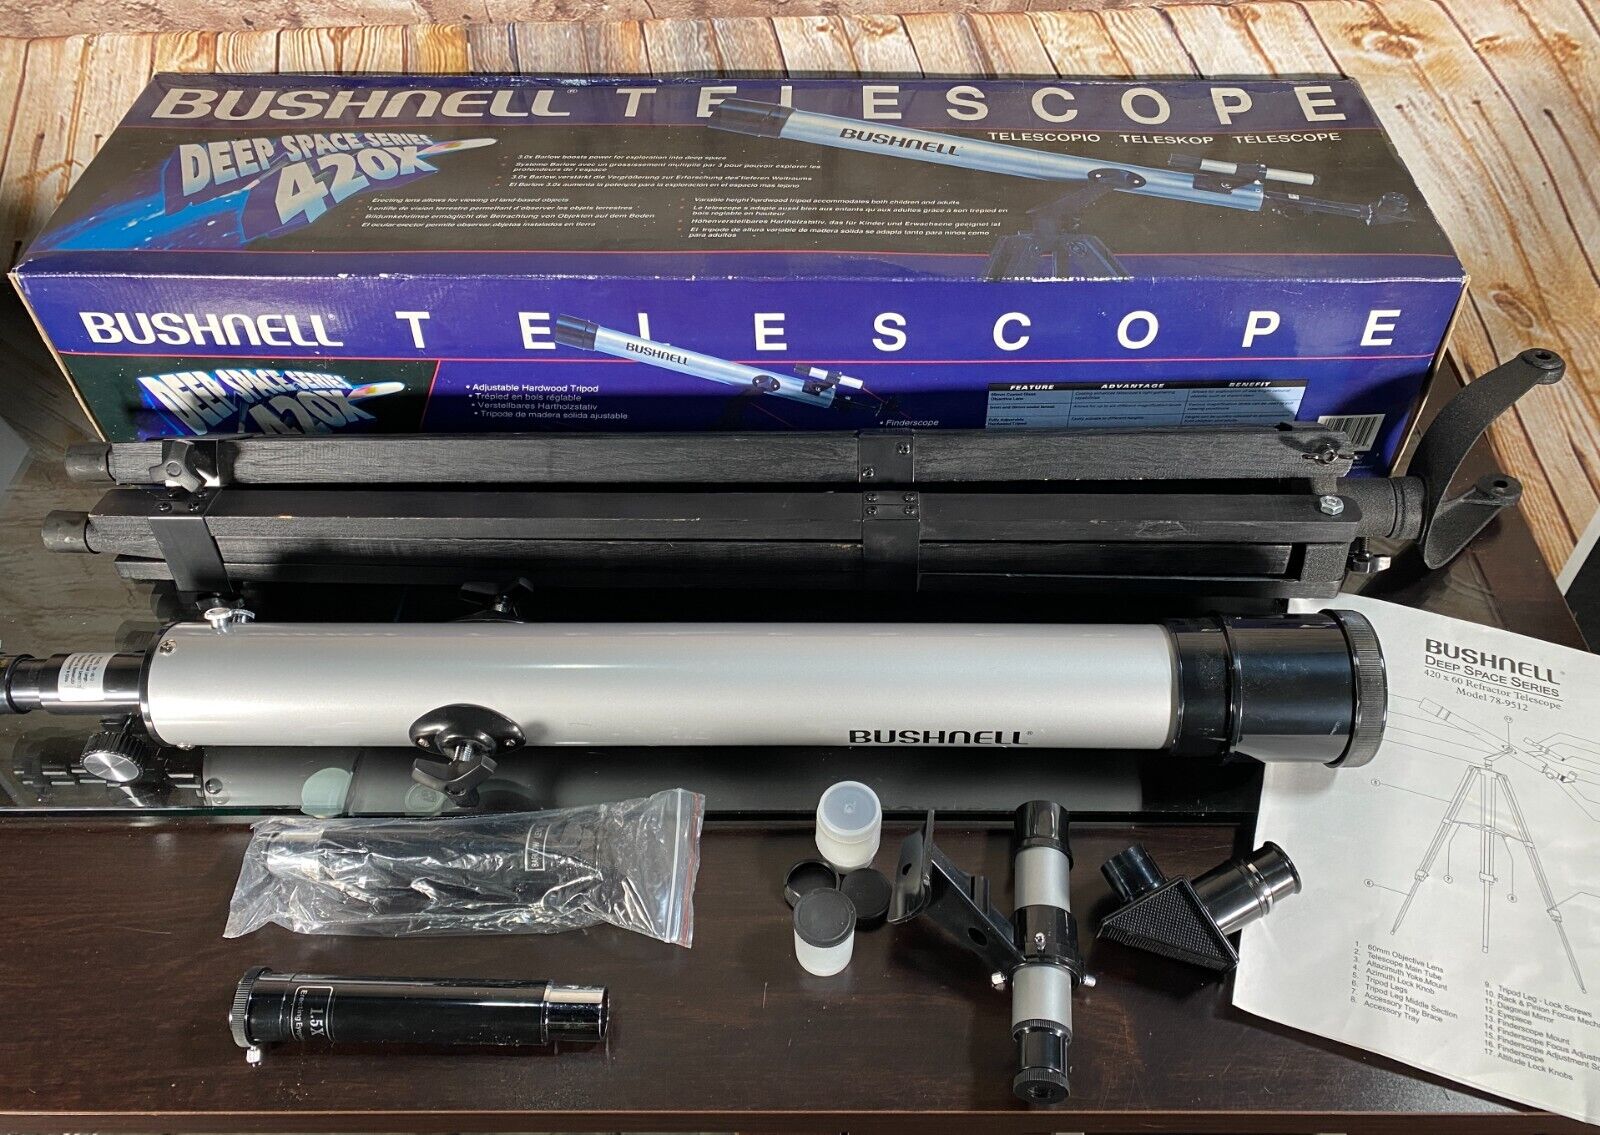 Bushnell Deep Space 420X #78-9512 60mm Refractor Telescope w/Hardwood Tripod